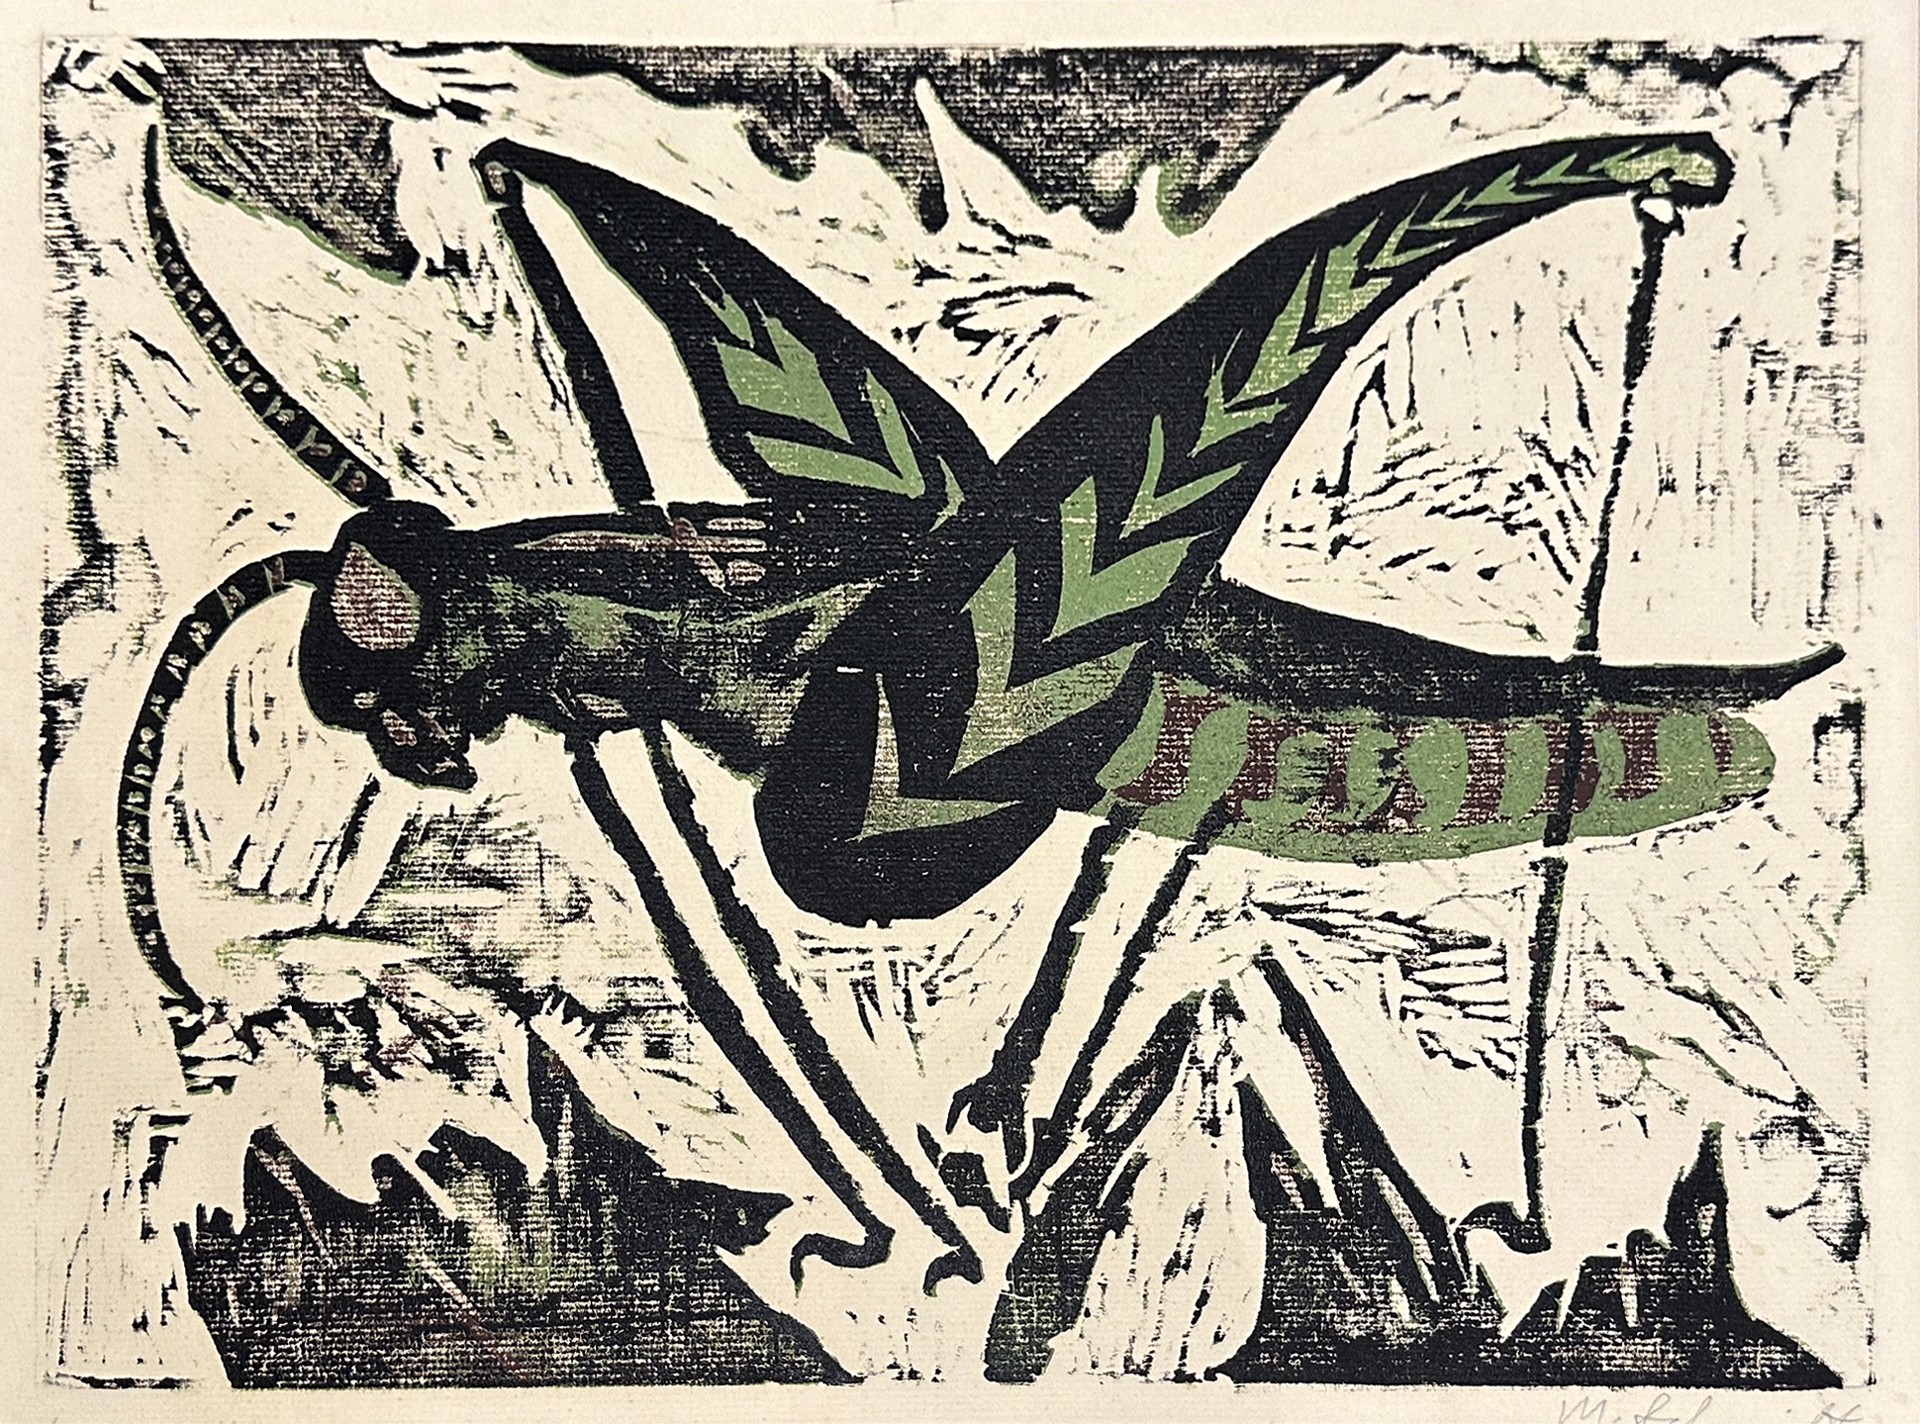 Grasshopper by Maurice Schmidt